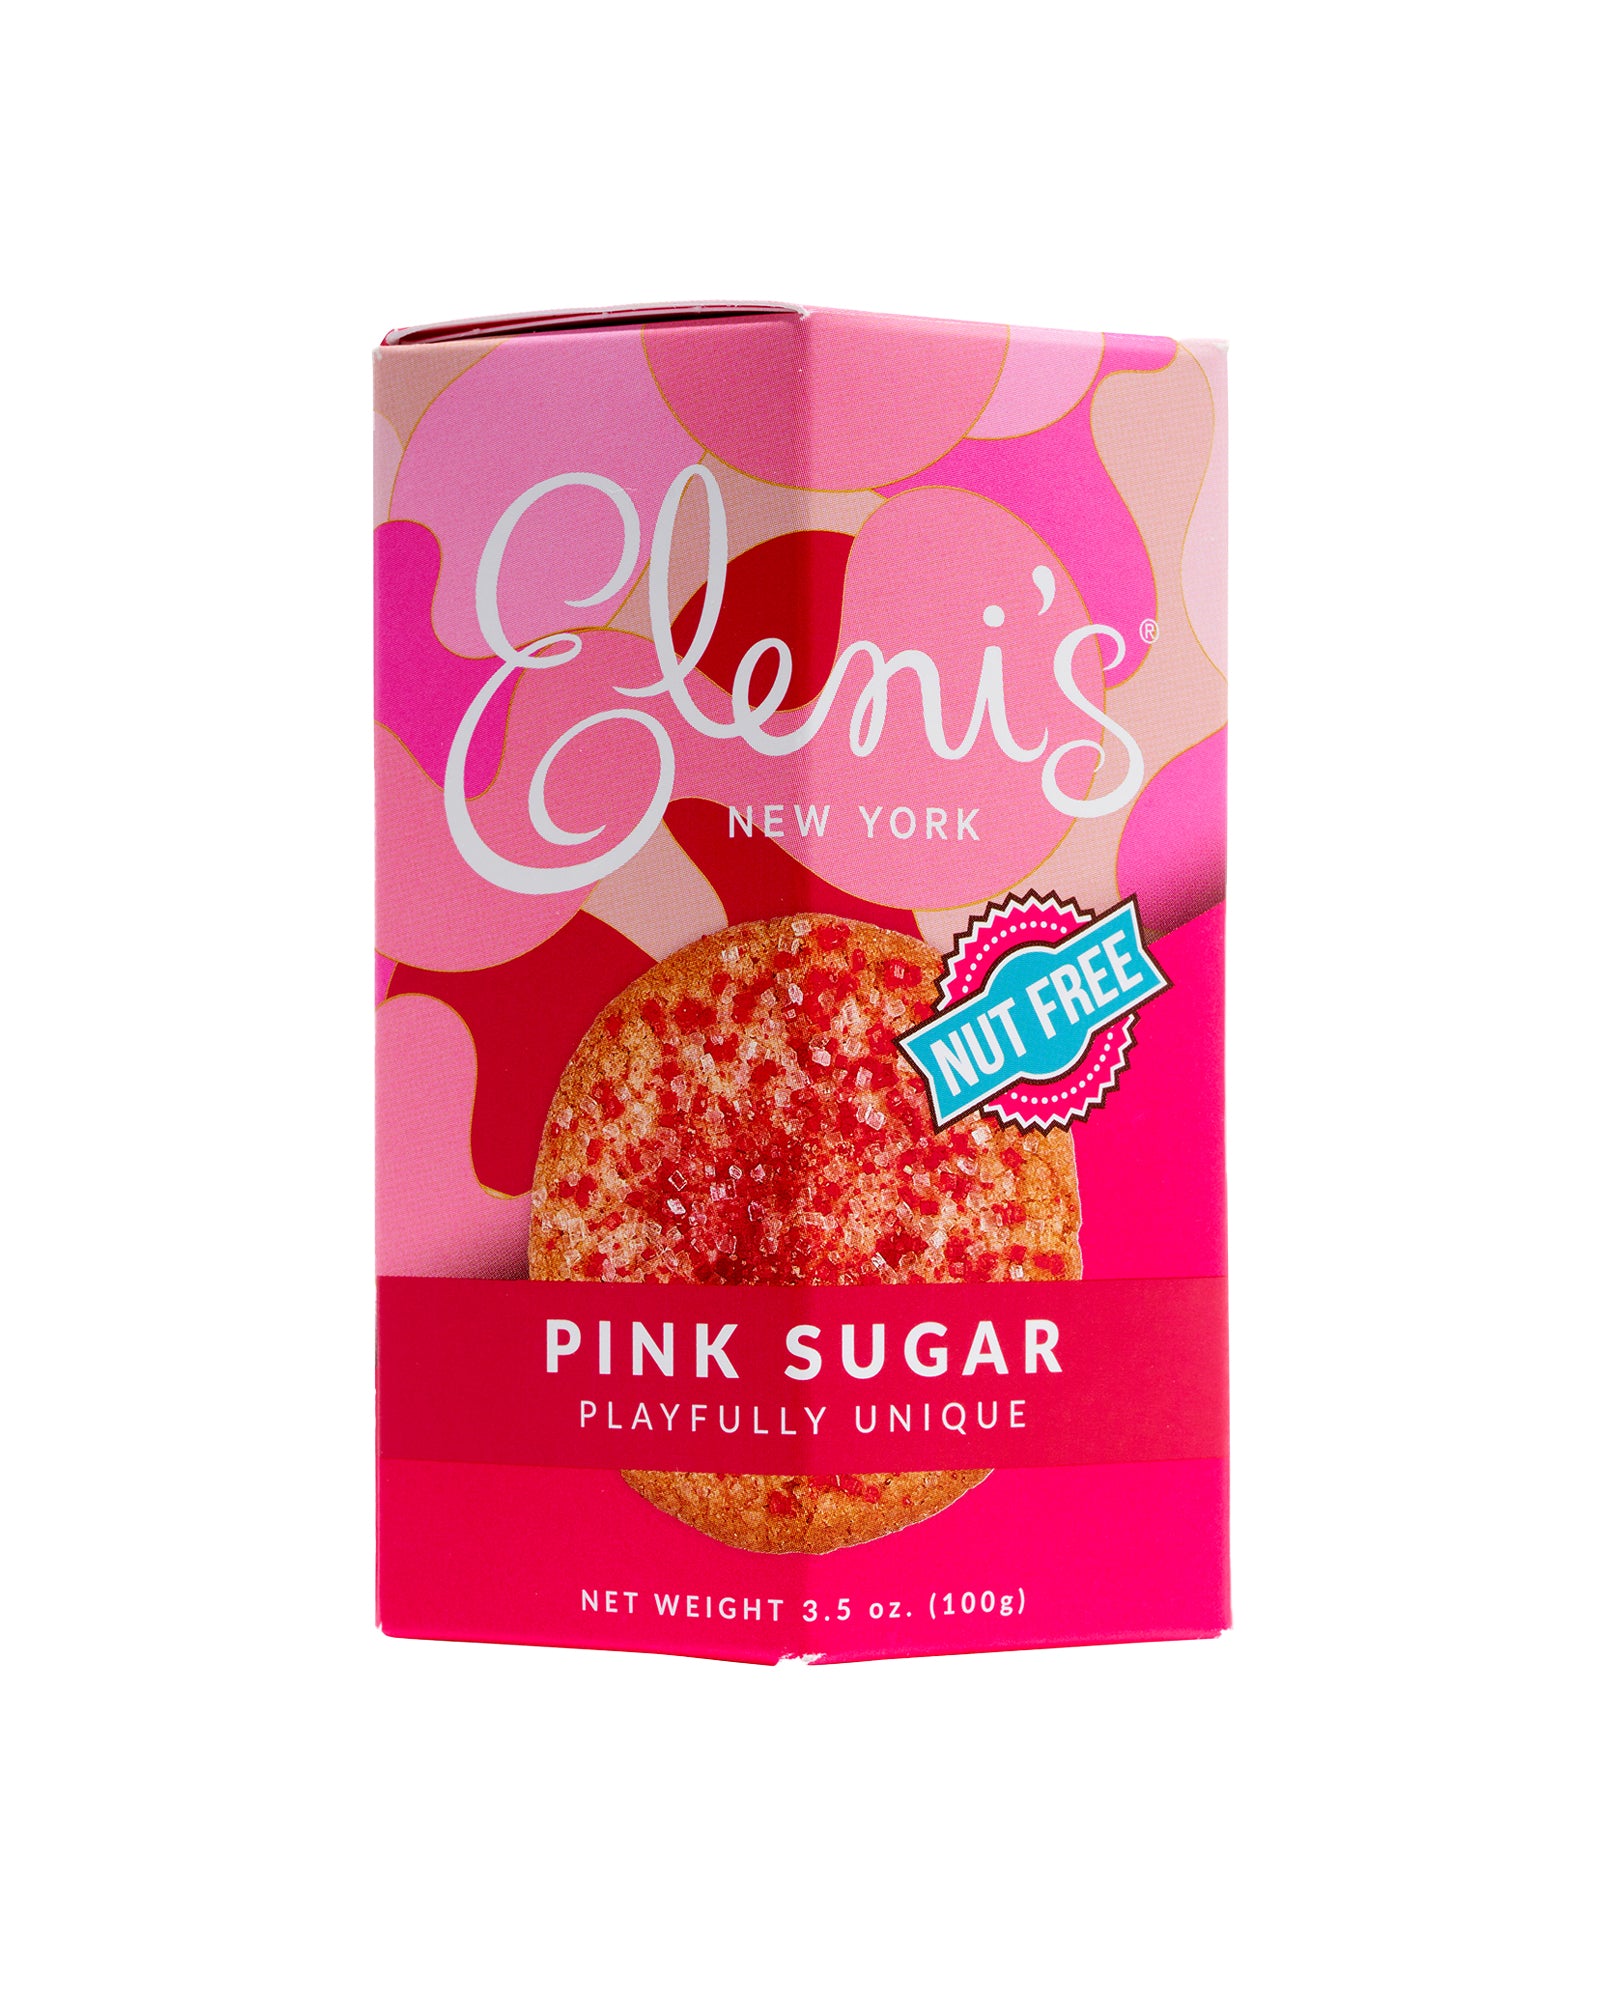 Pink Sugar Cookies by Eleni's - Hive Brands